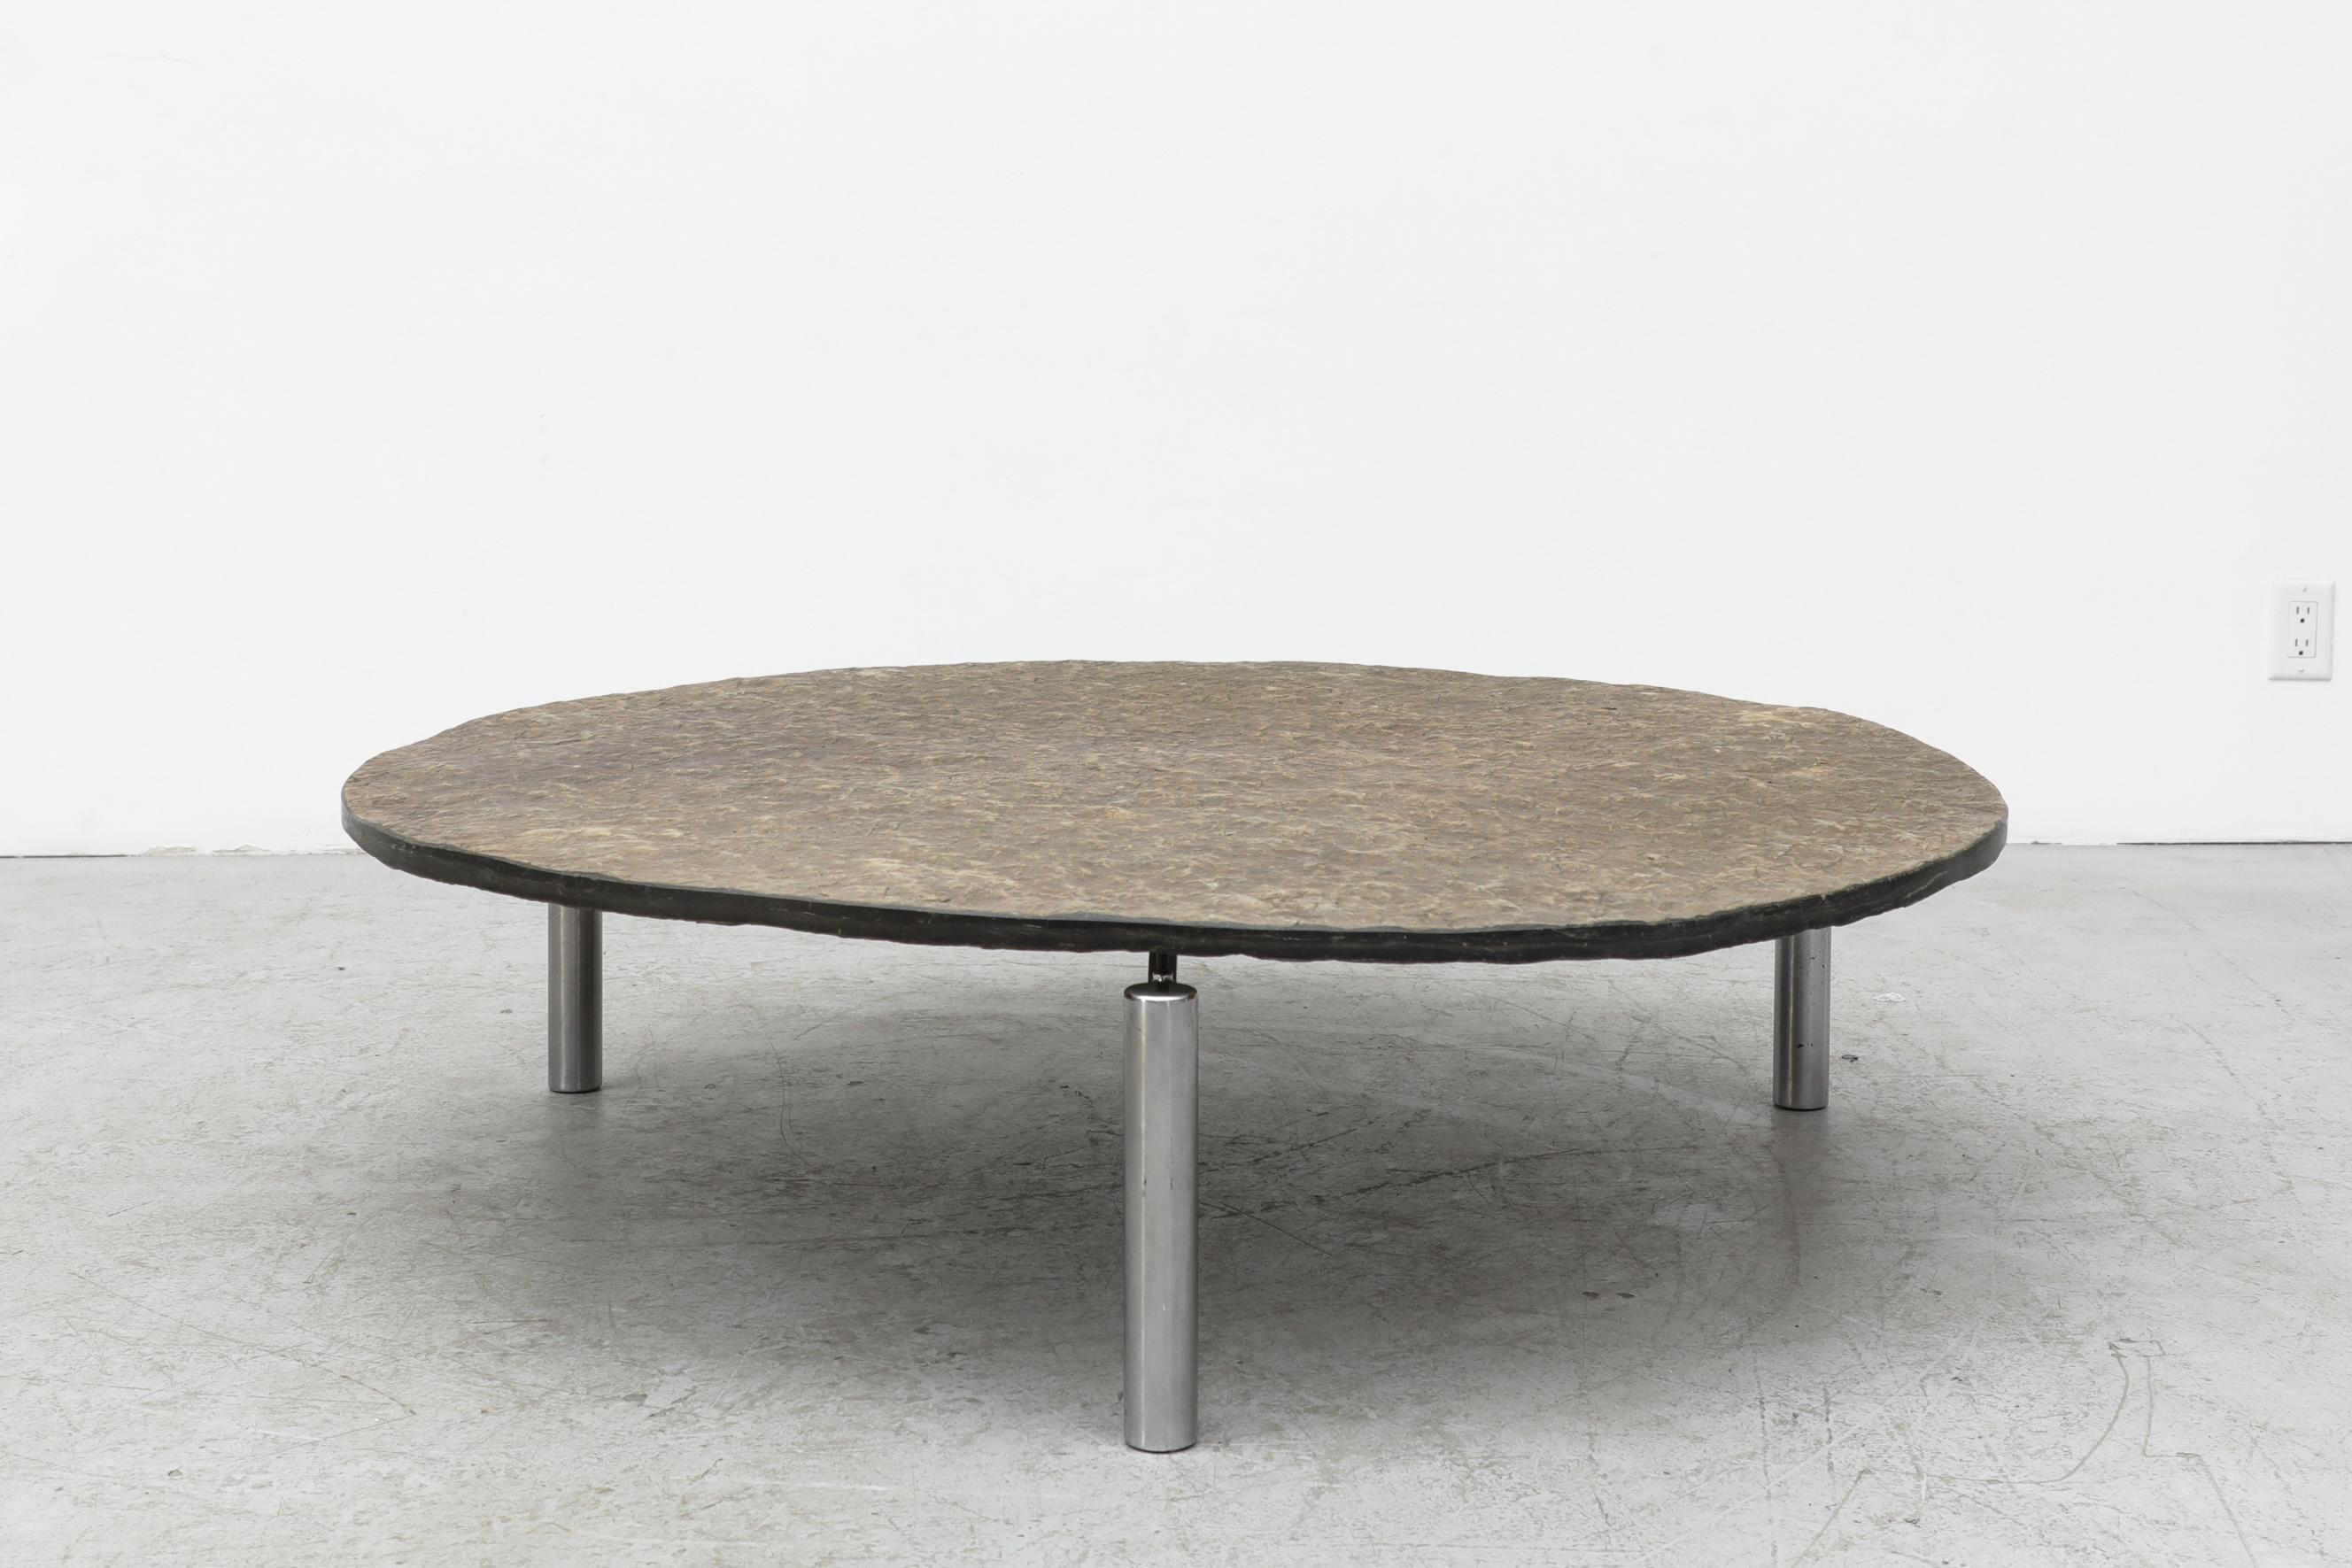 Dutch Giant Poul Kjerholm Inspired Stone and Chrome Coffee Table